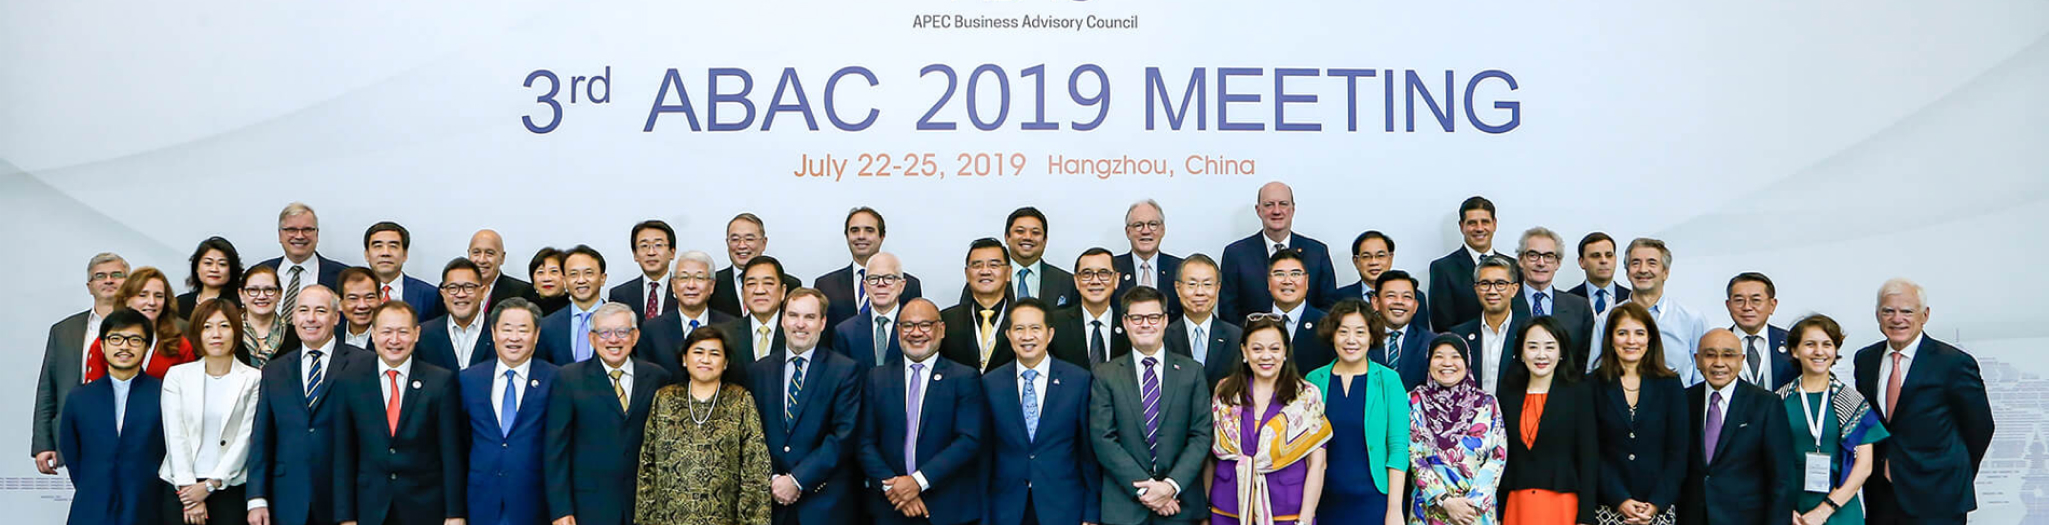 APEC Business Advisory Council (ABAC)